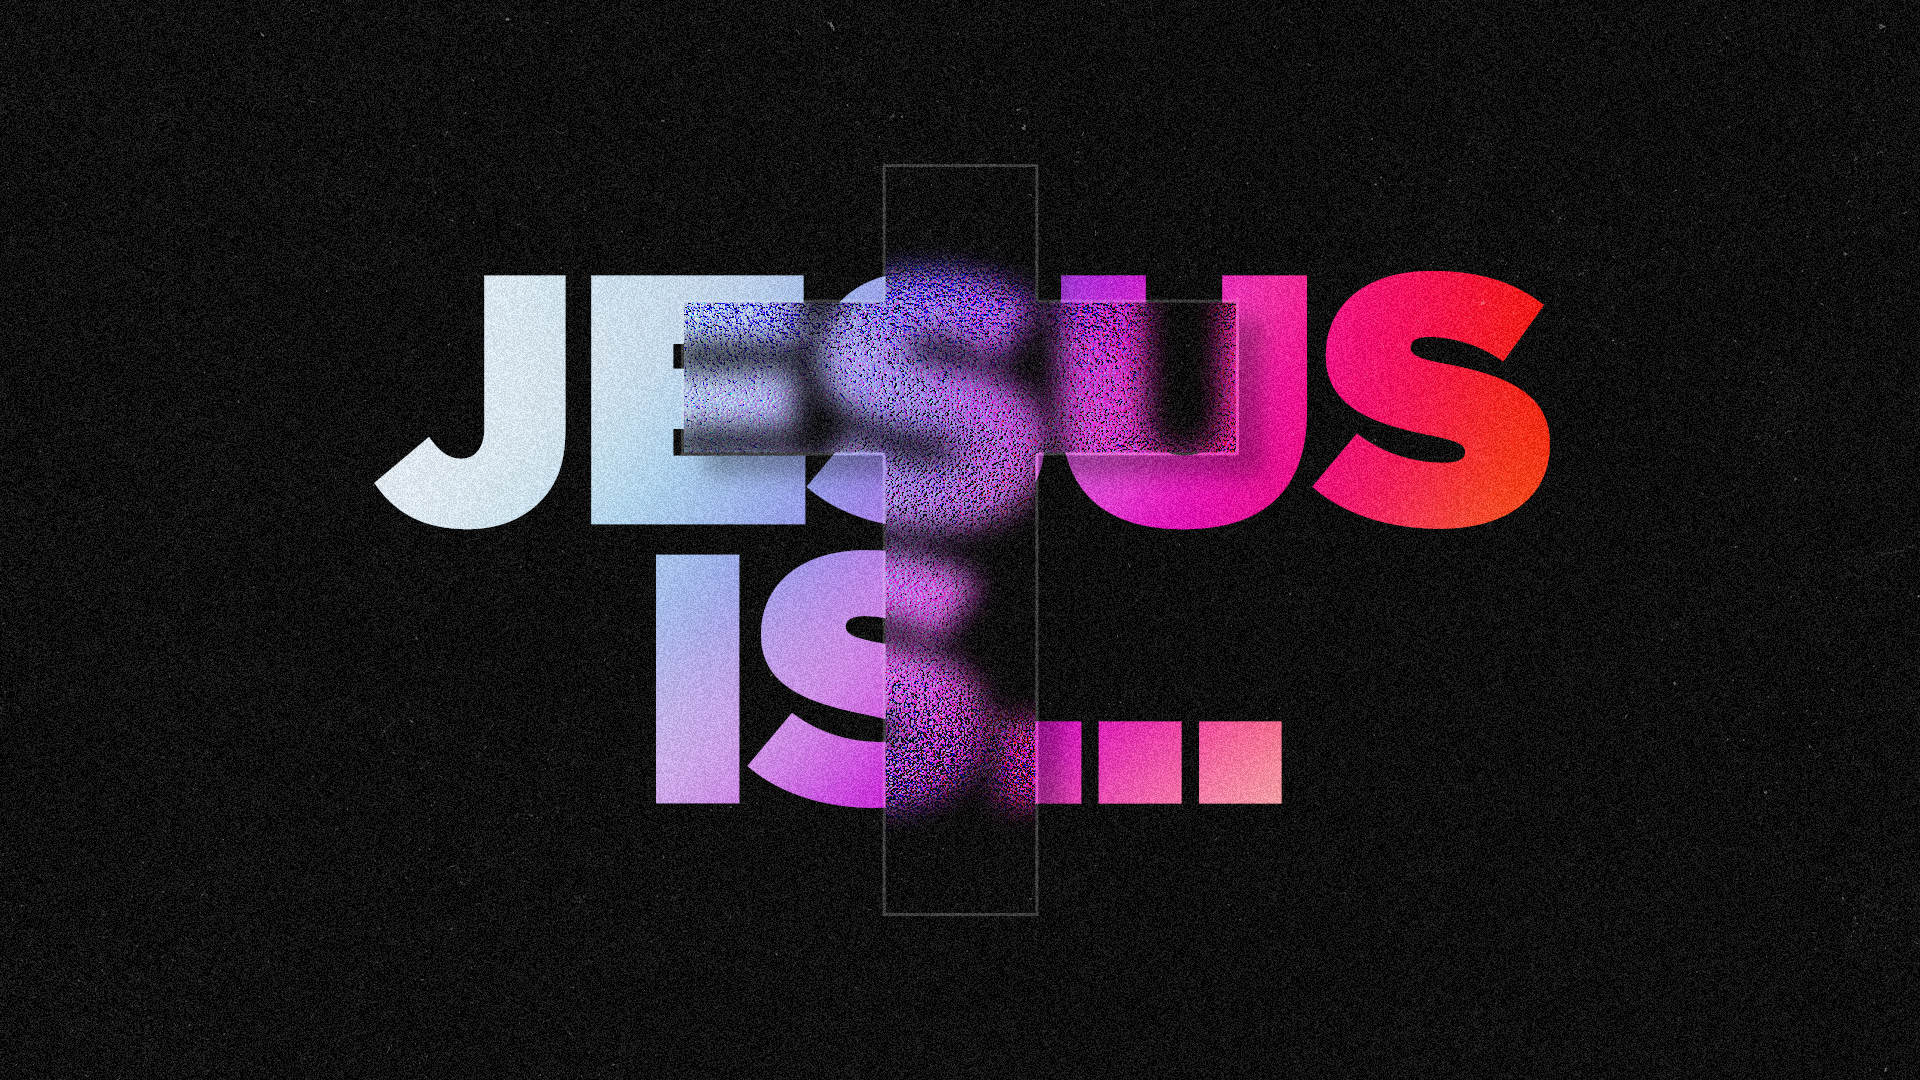 Jesus is...